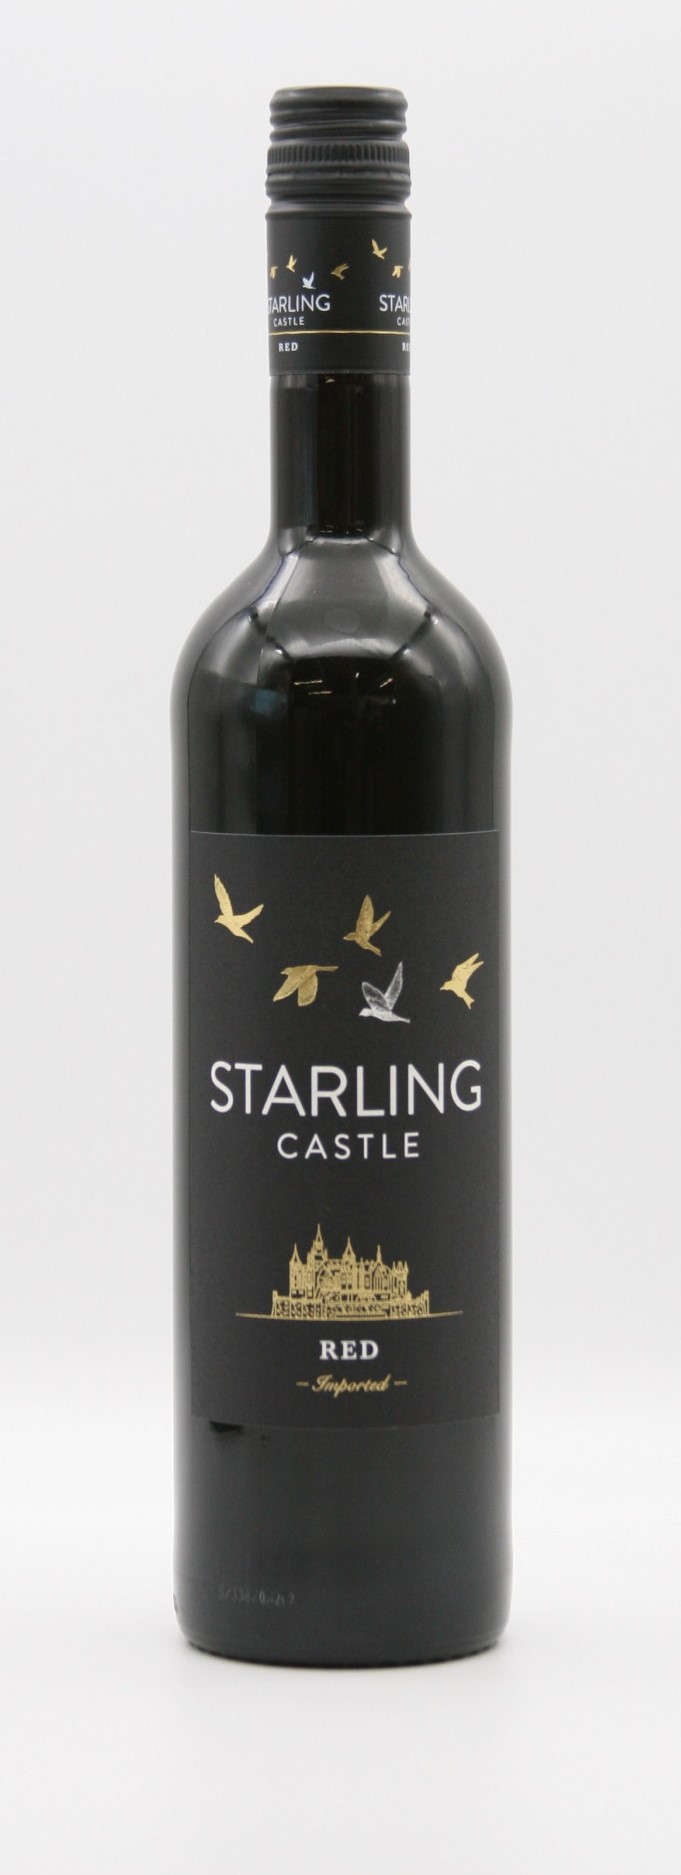 & - Wine Wine Red 750ml Spirits Starling Luekens Castle